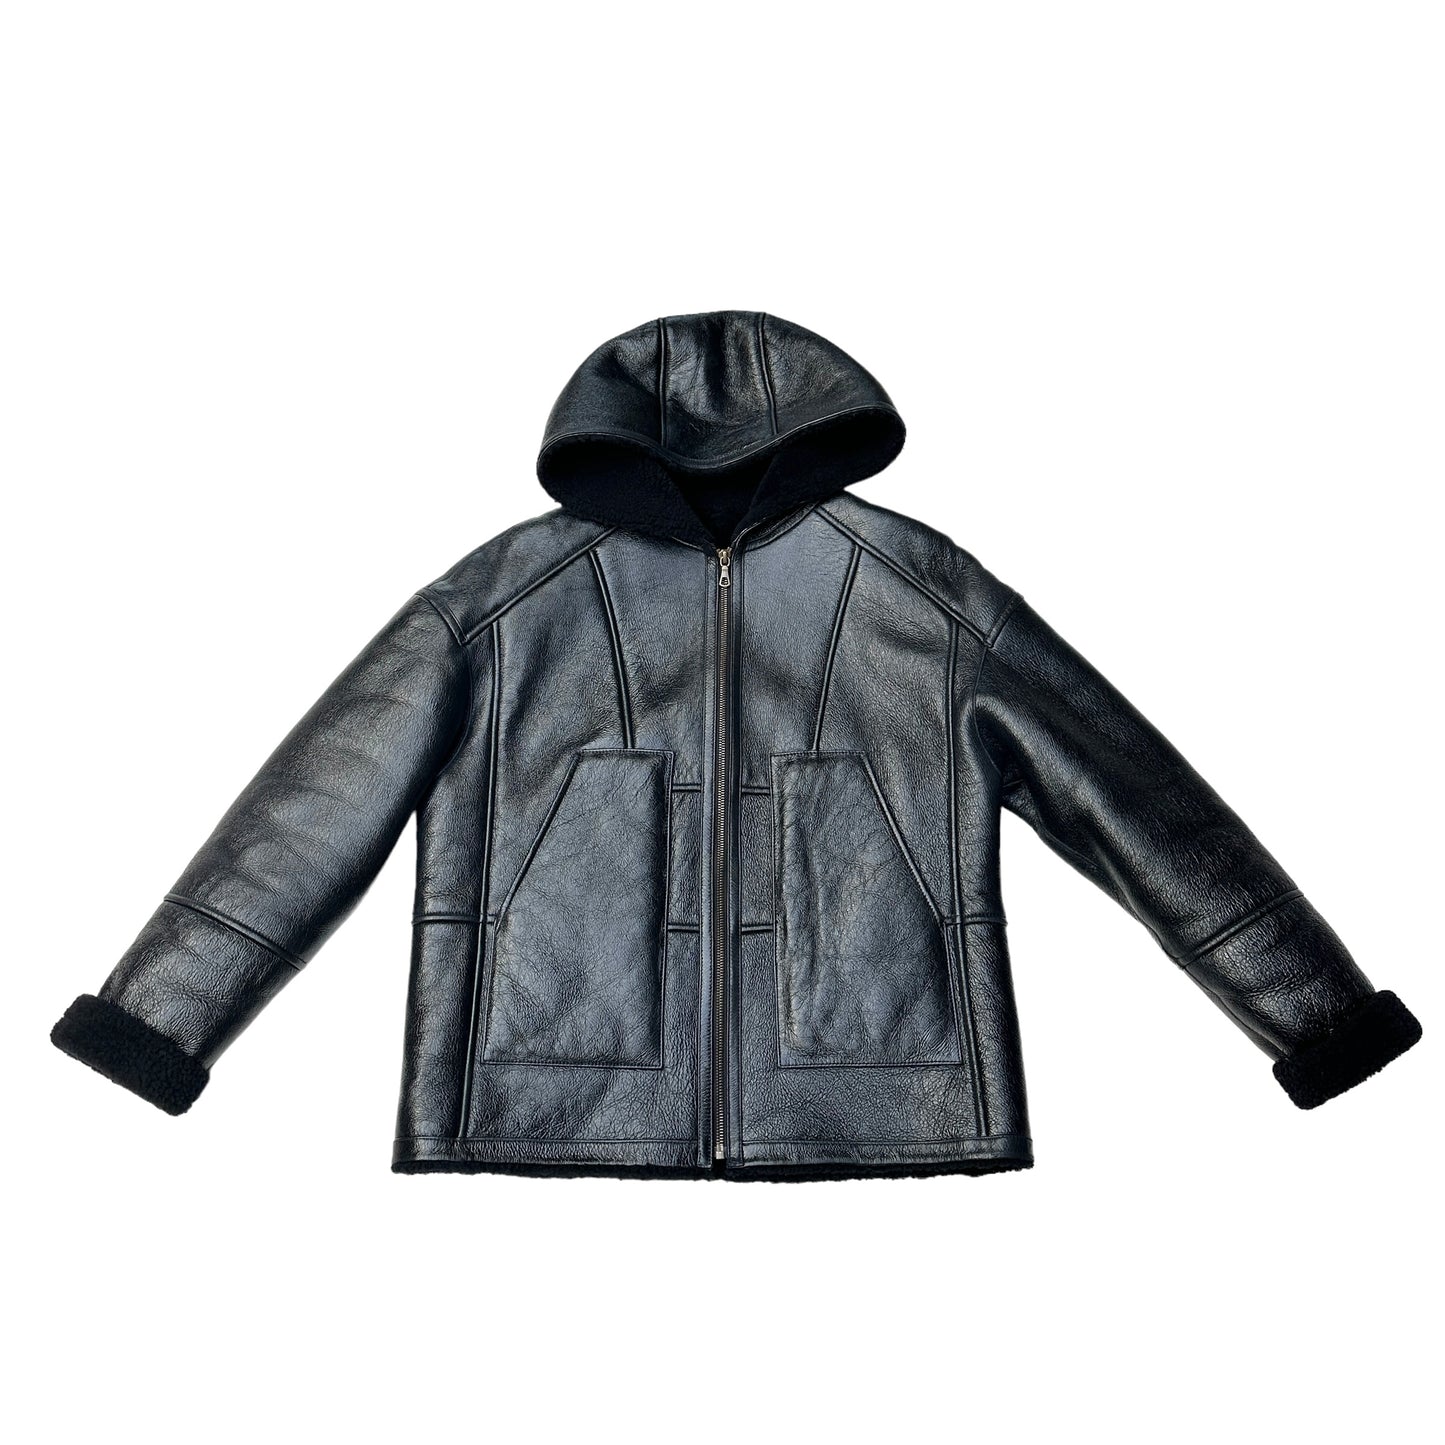 Black Lamb Leather Jacket - S